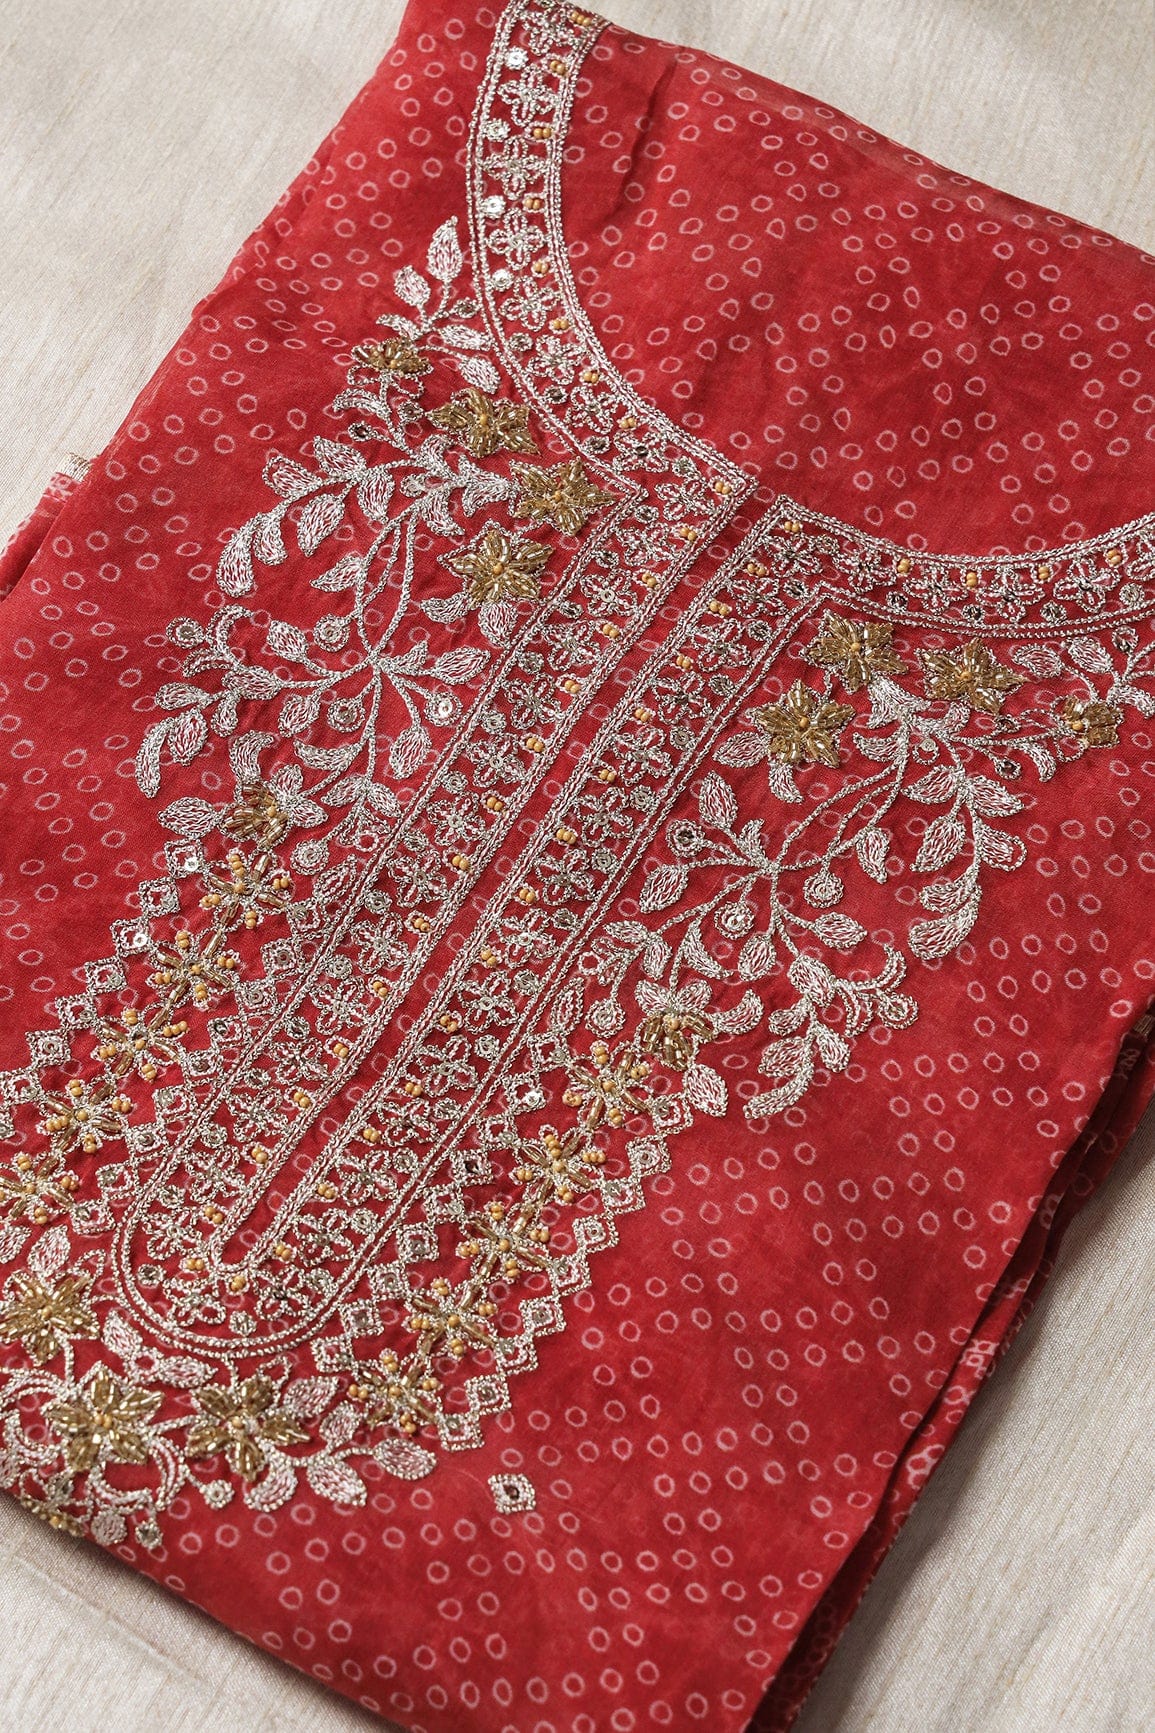 doeraa Semi Stitched Red Semi Stitched Pure Organza Suit Set (3 piece)